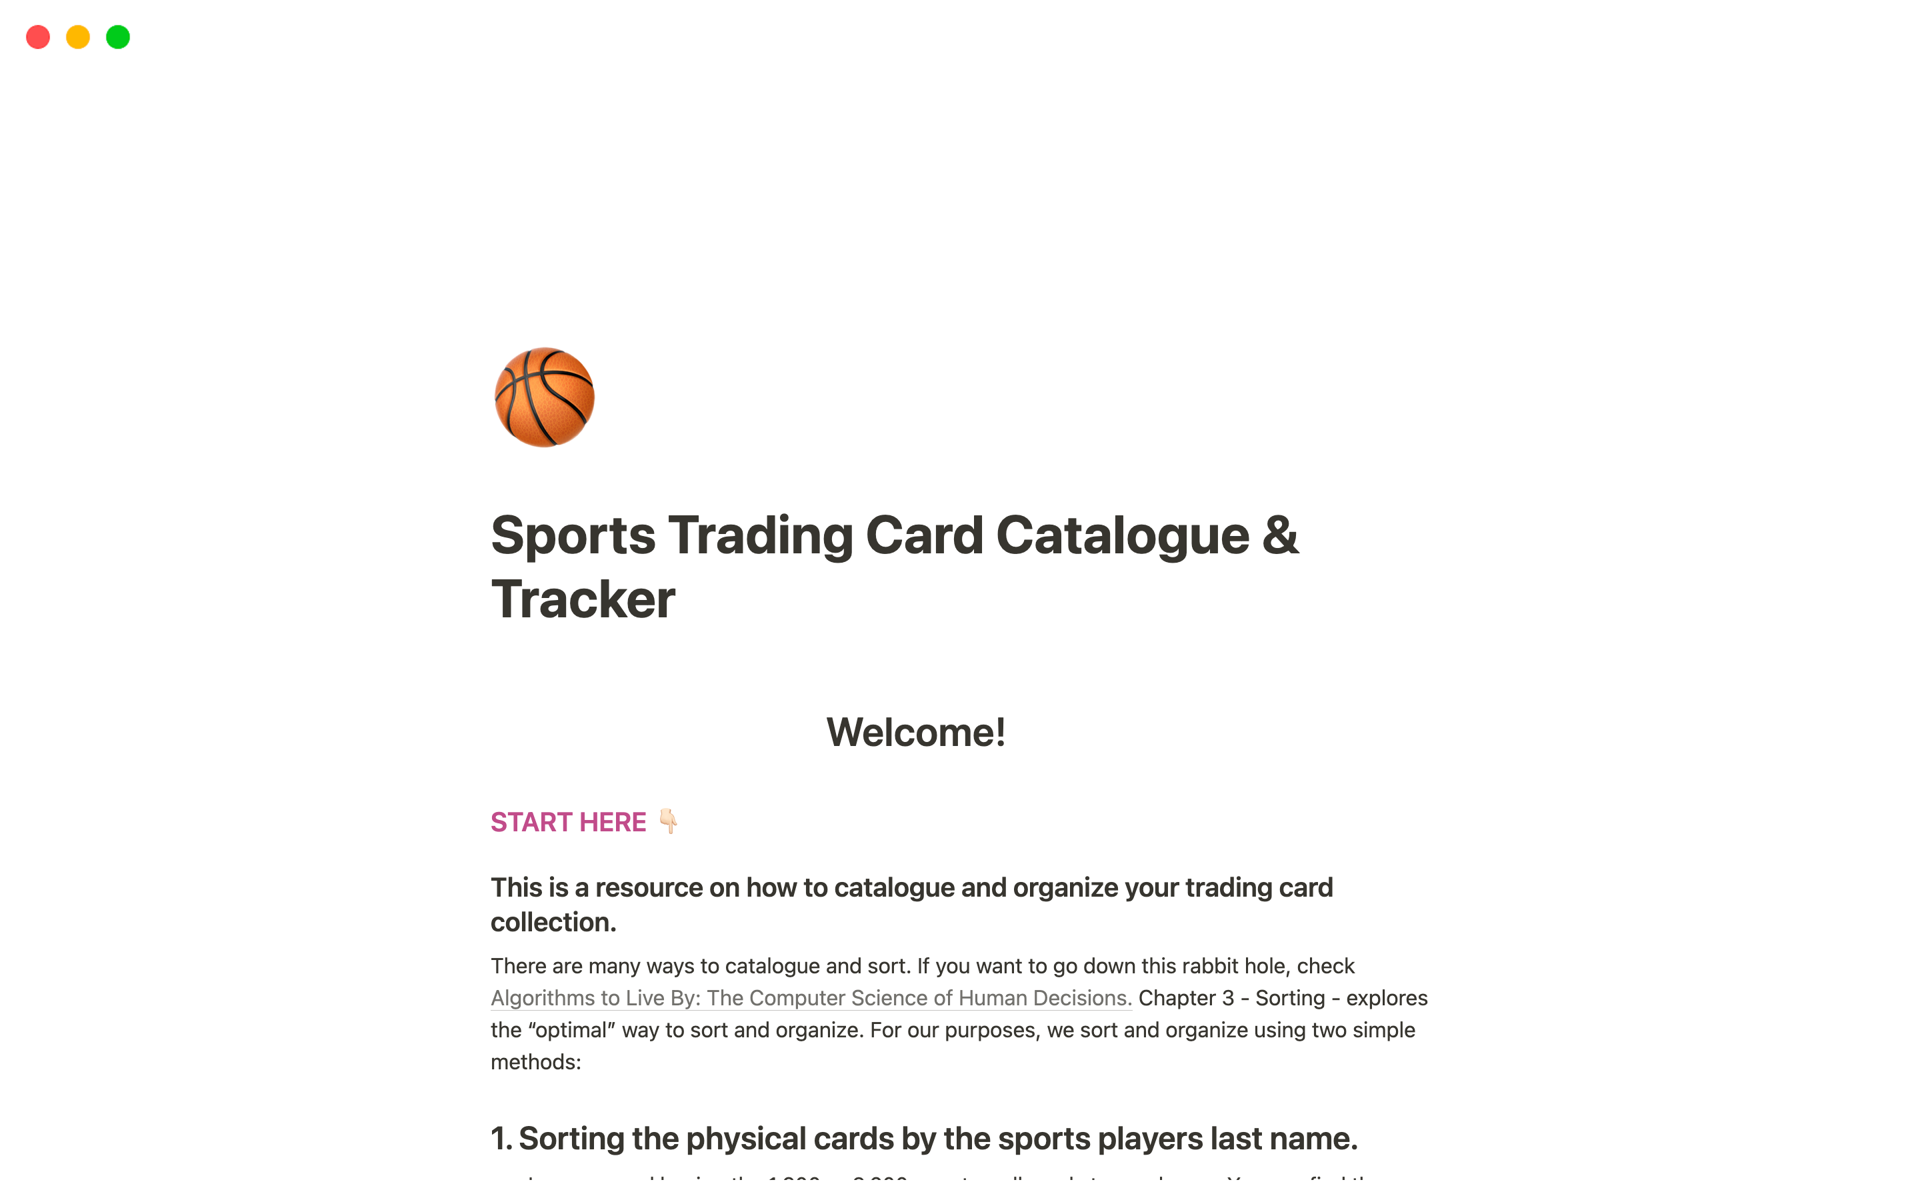 Sports Trading Card Catalogue & Tracker님의 템플릿 미리보기